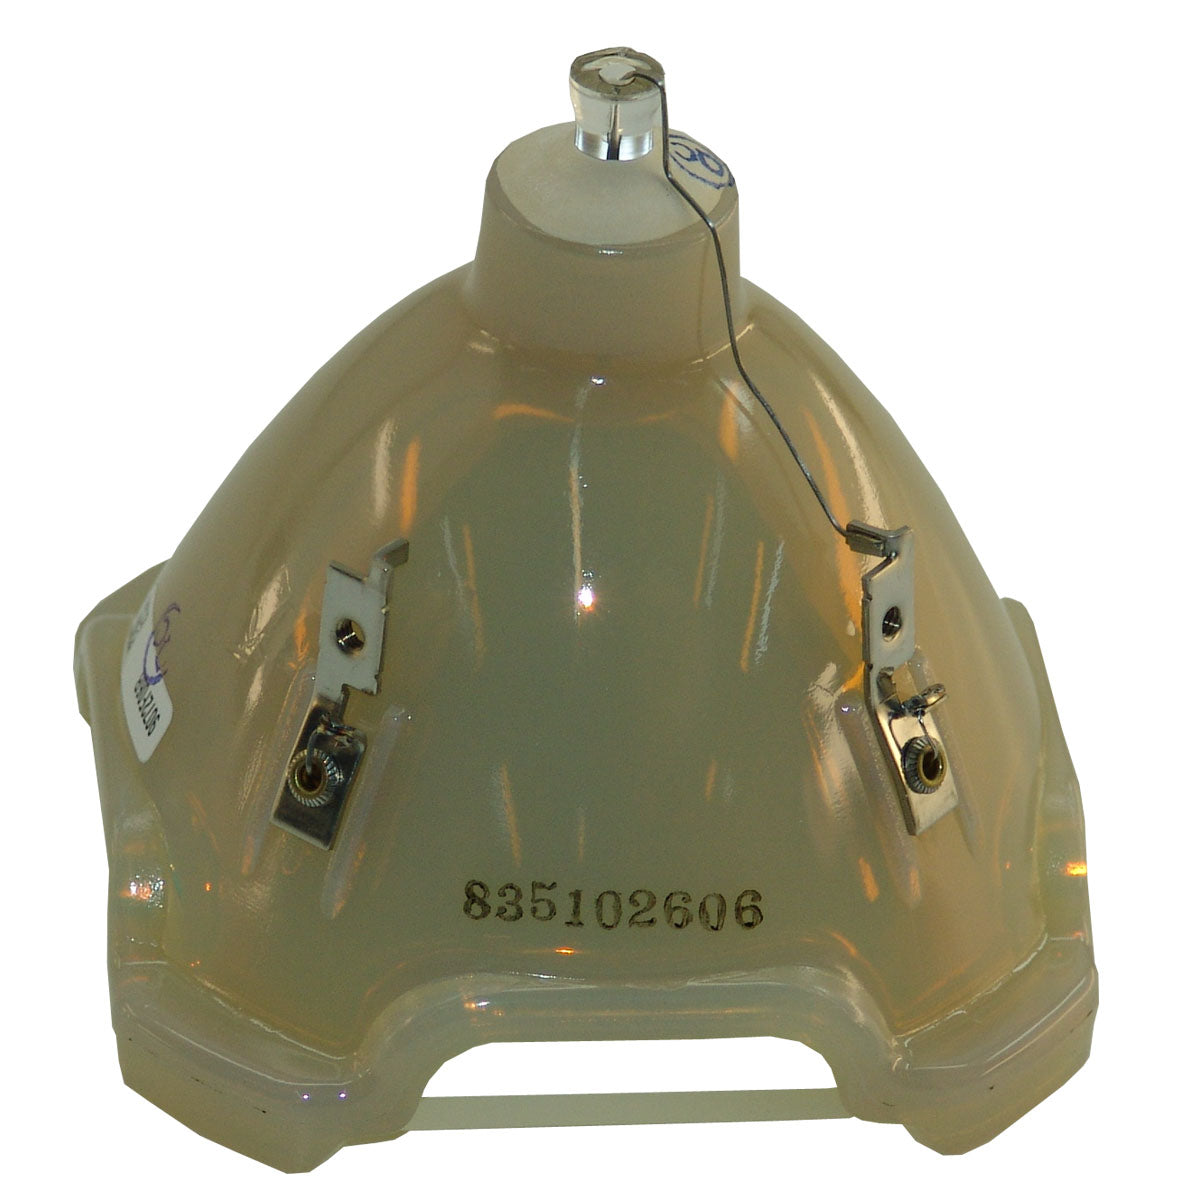 Eiki POA-LMP105 Osram Projector Bare Lamp